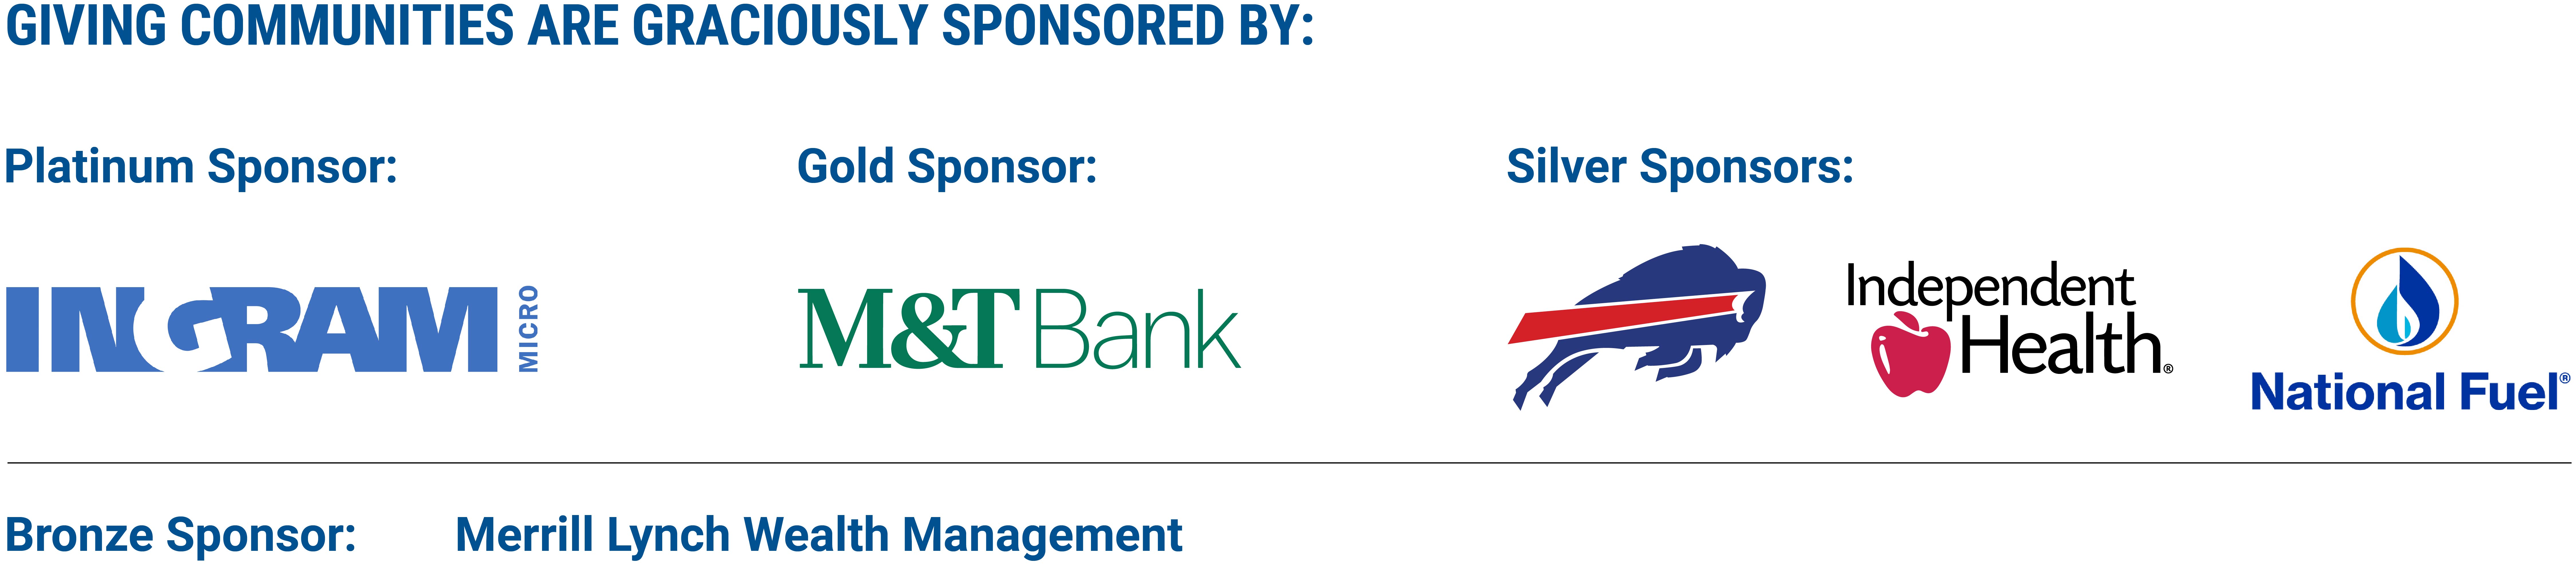 Sponsors: Ingram Micro, M&T Bank, Buffalo Bills, Independent Health, National Fuel, Merril Lynch 